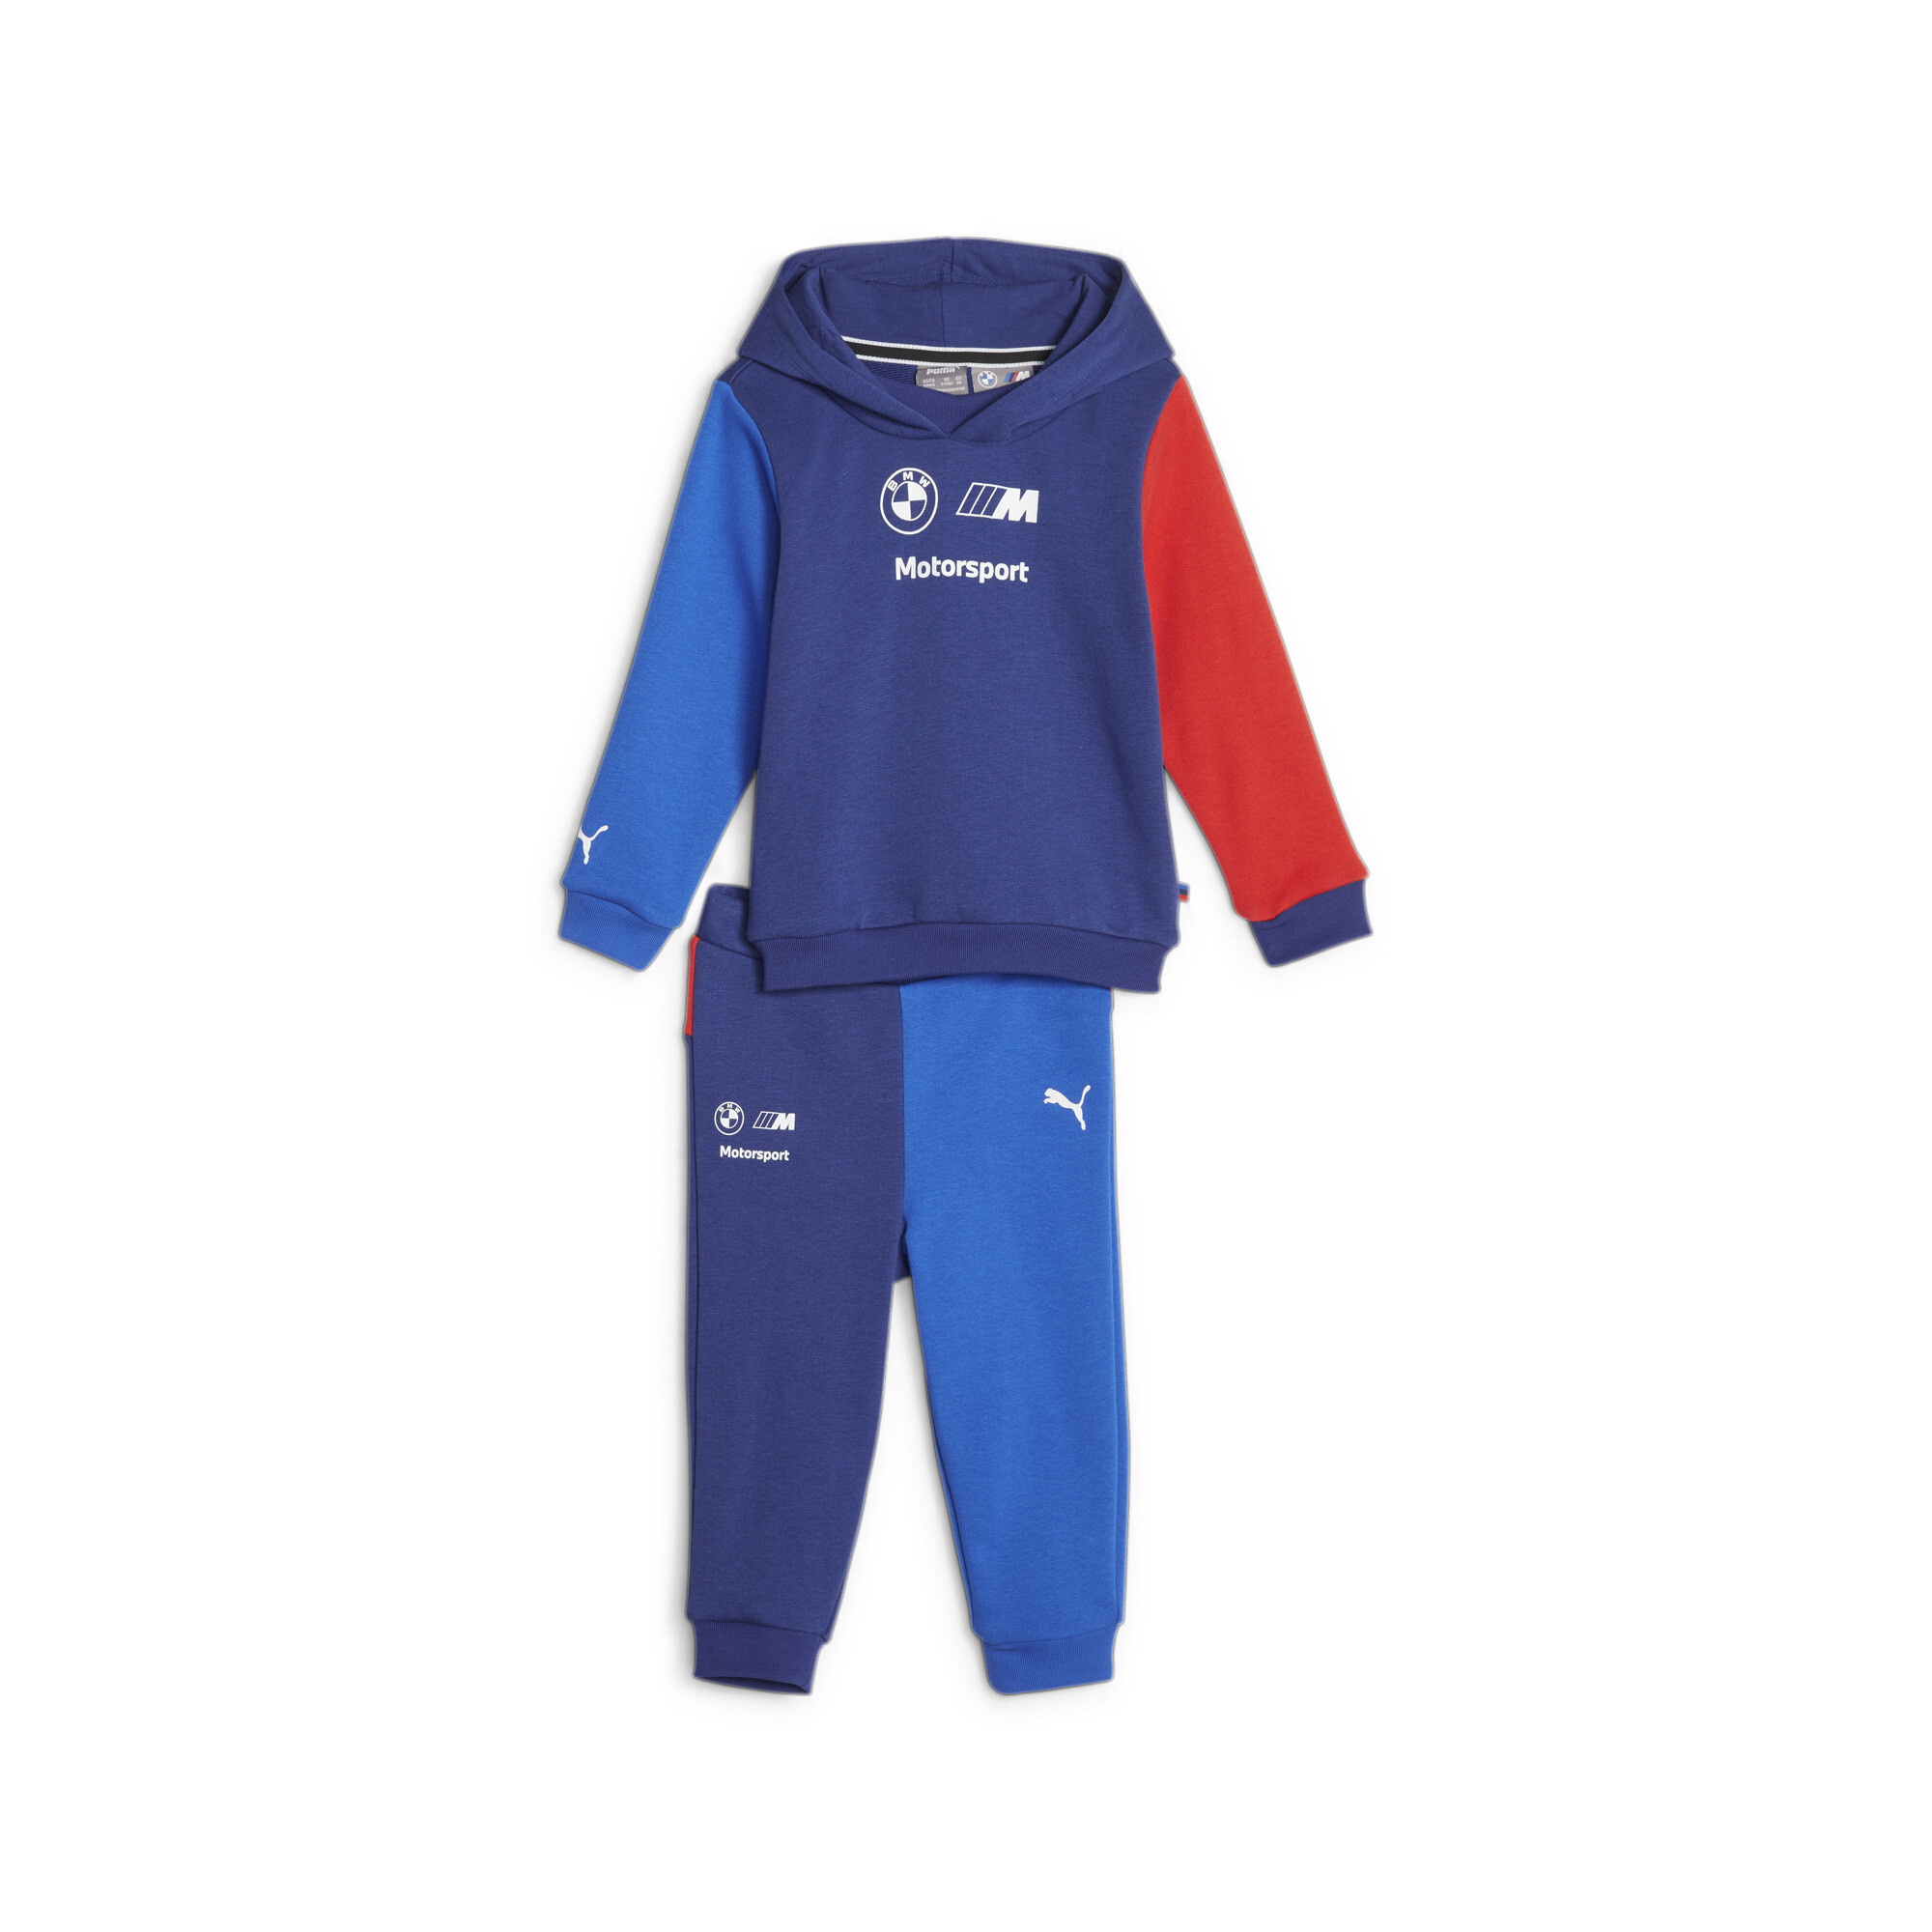 Puma BMW M Motorsport Kids' Motorsport Jogger Suit, Blue, Size 12-18M, Clothing